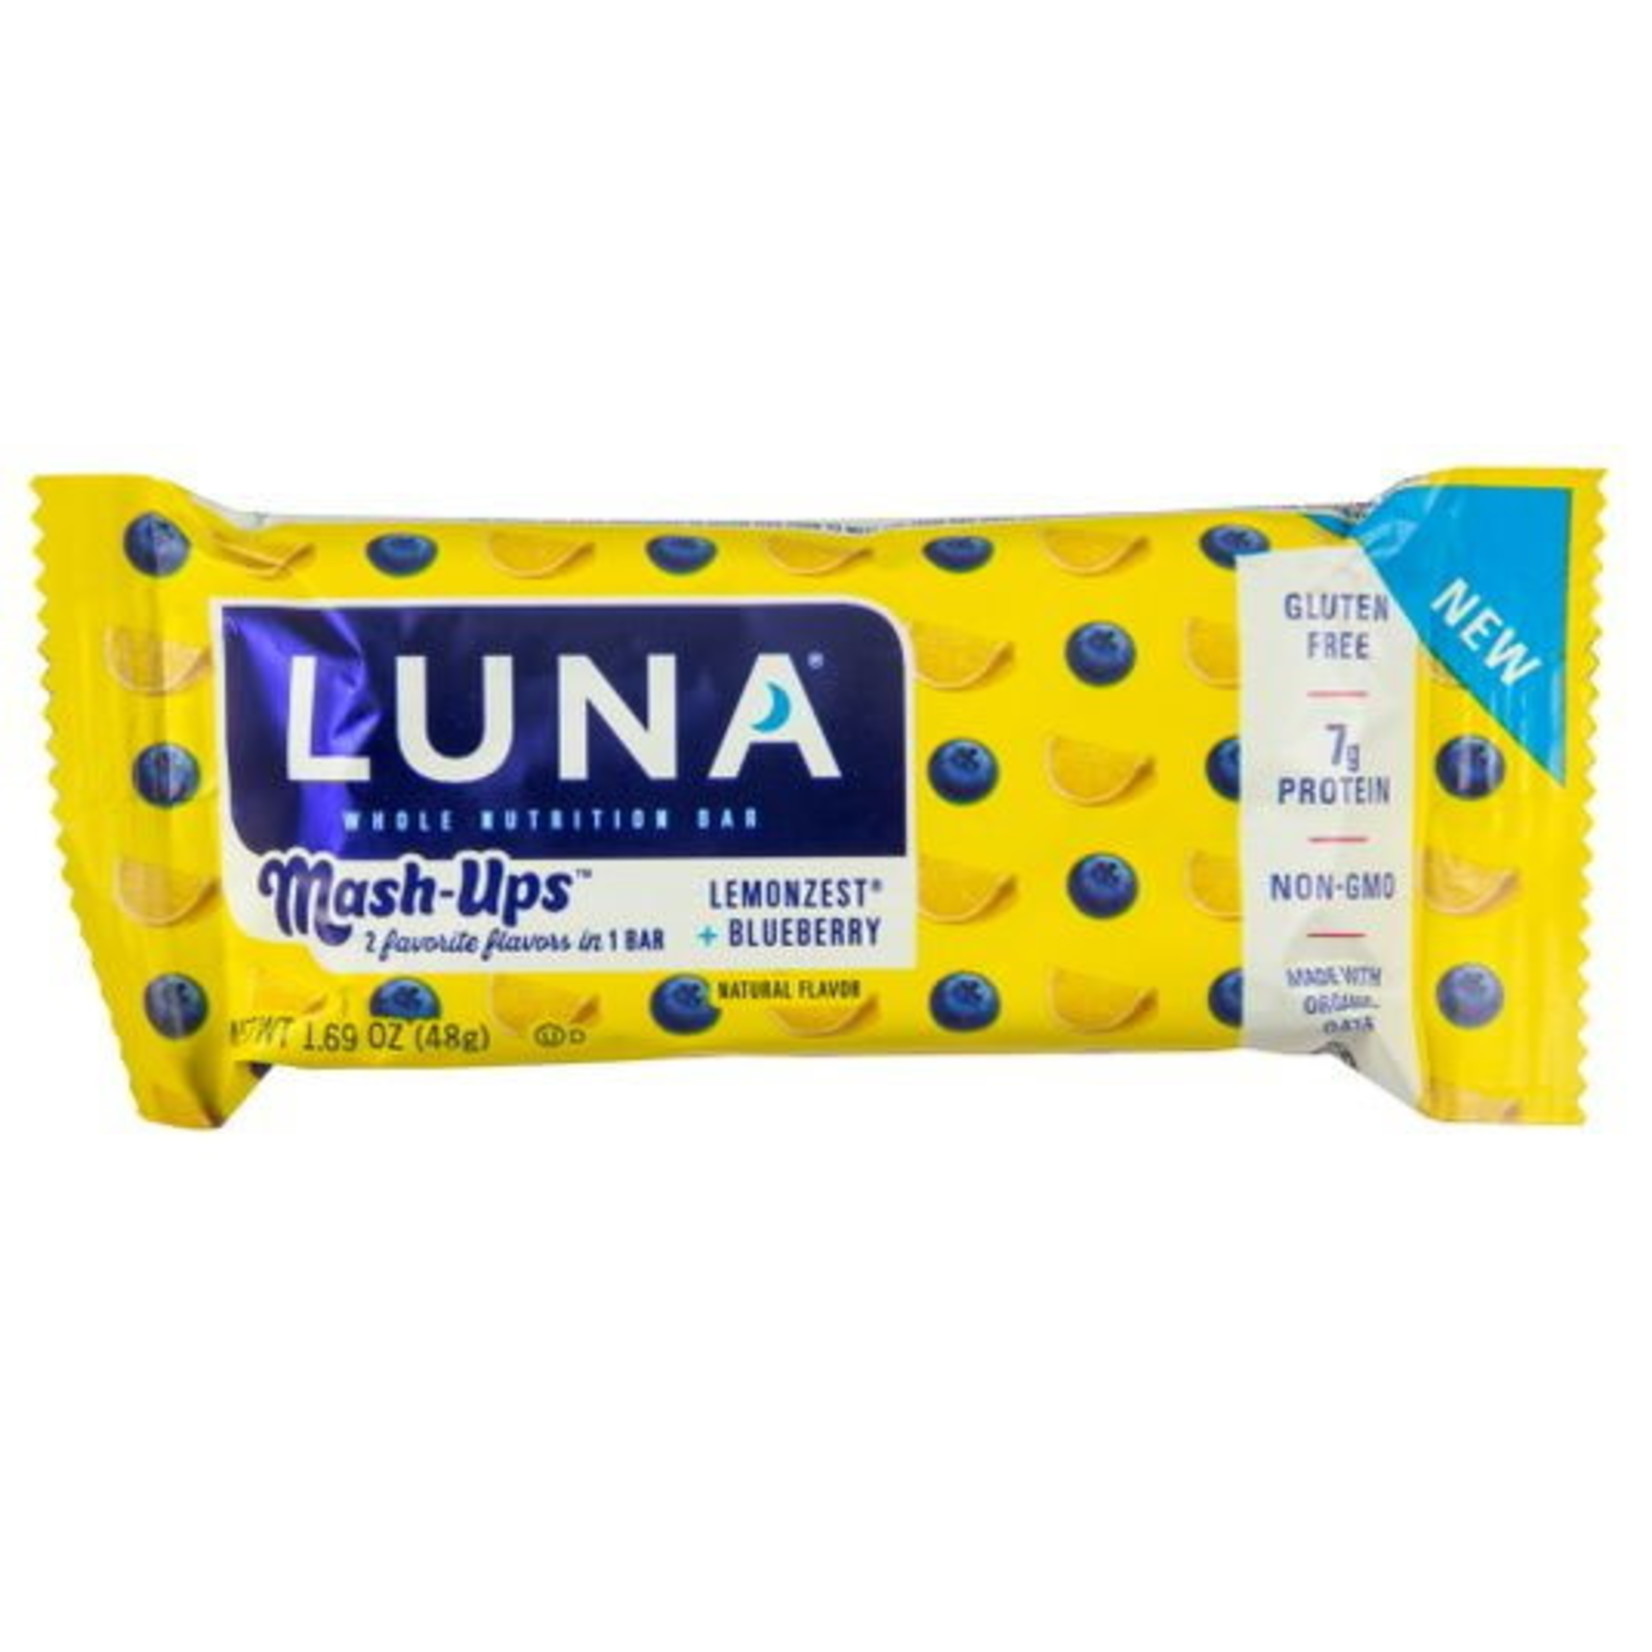 Luna LemonZest+Blueberry